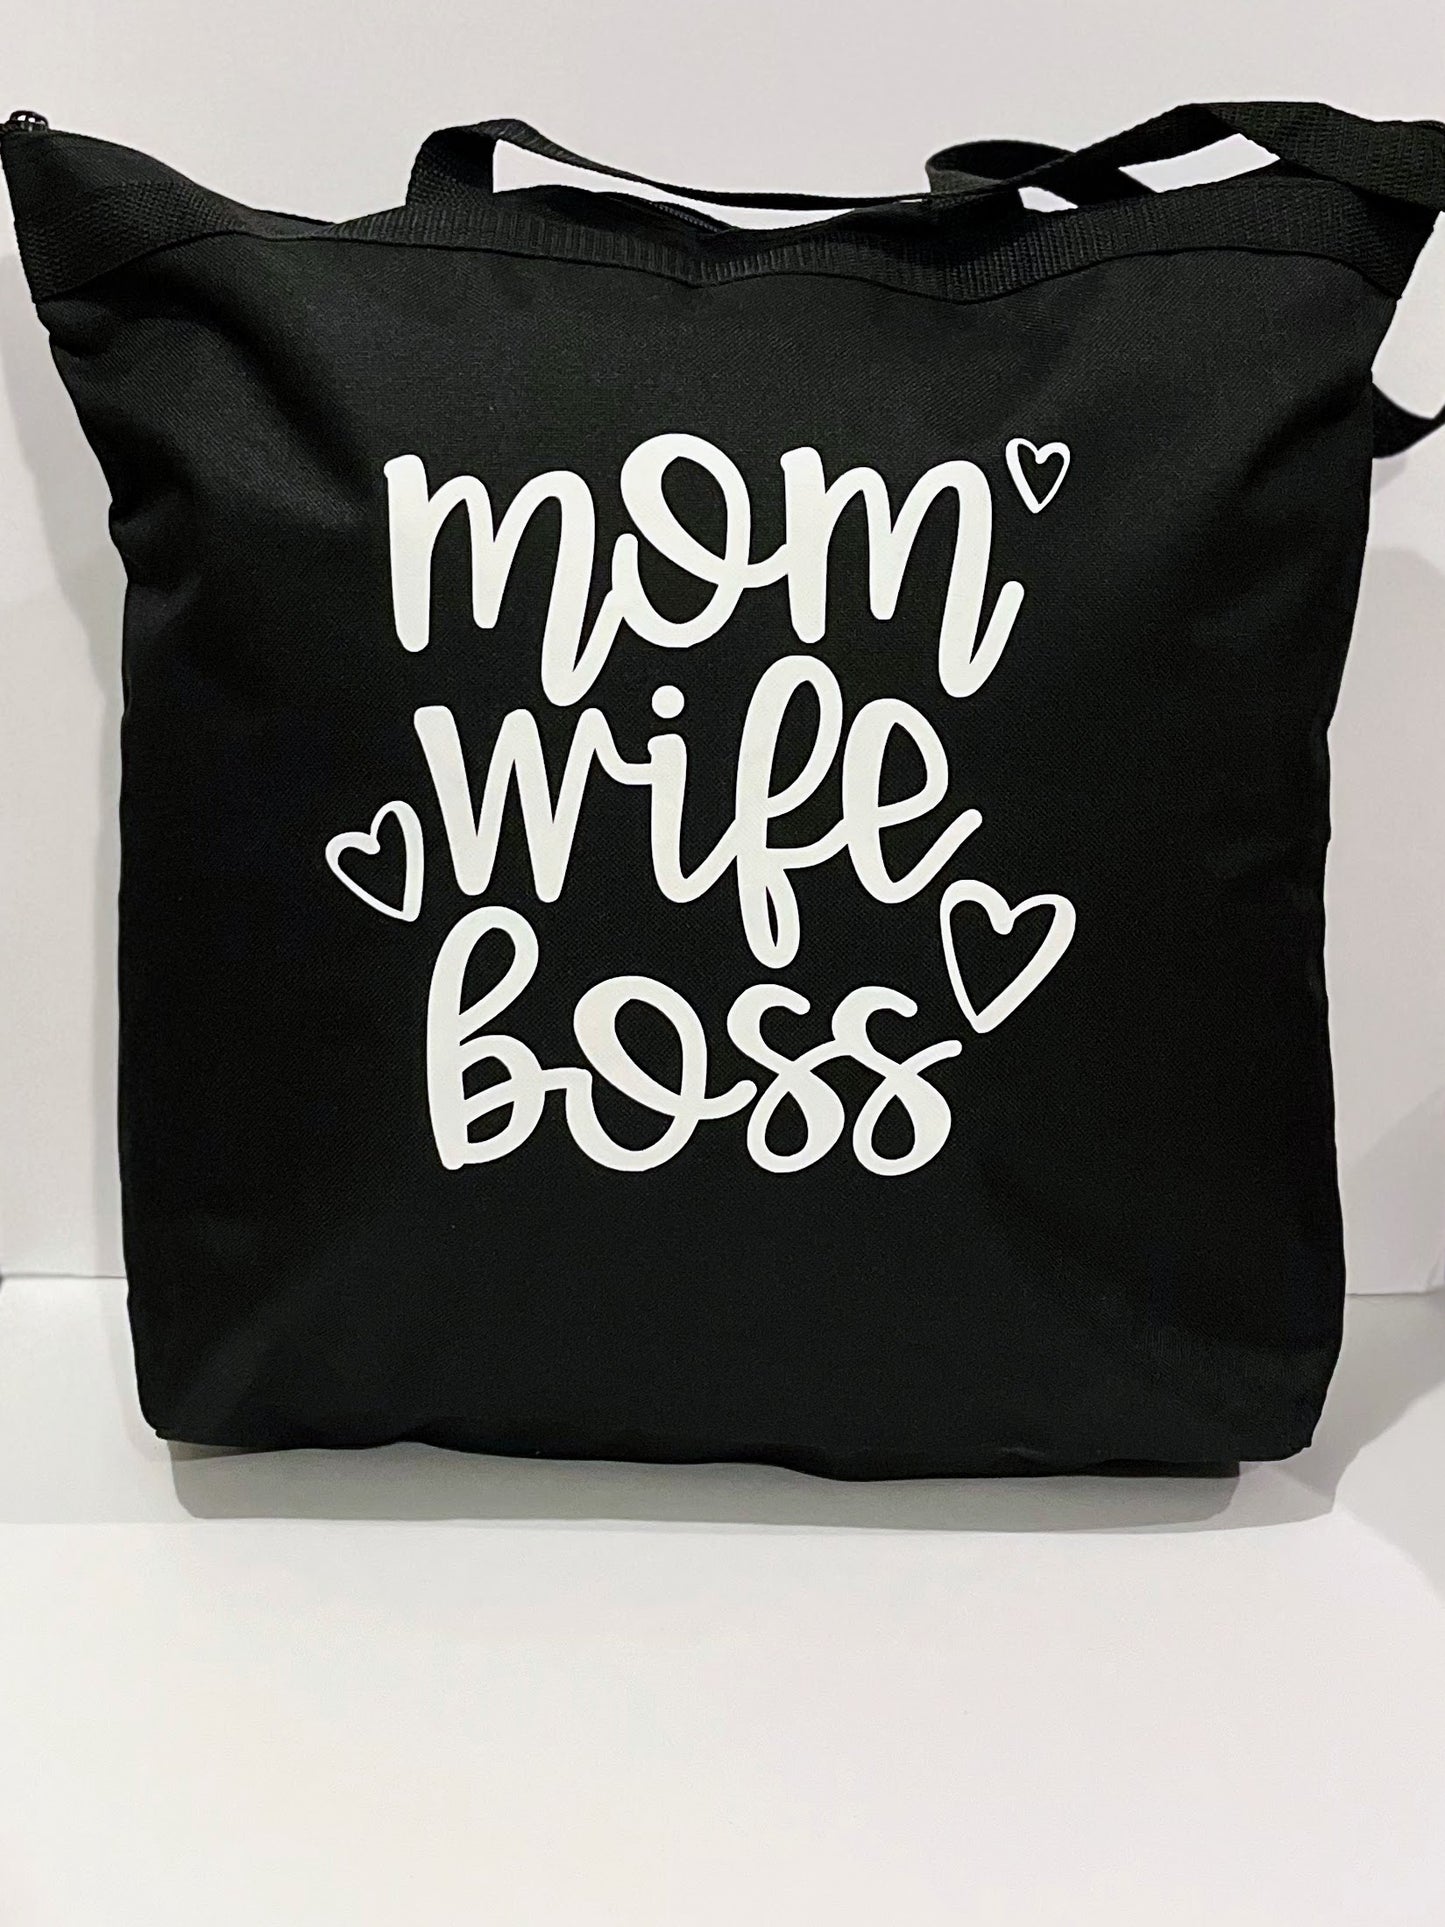 Mom Wife Boss - Zippered Tote Bag